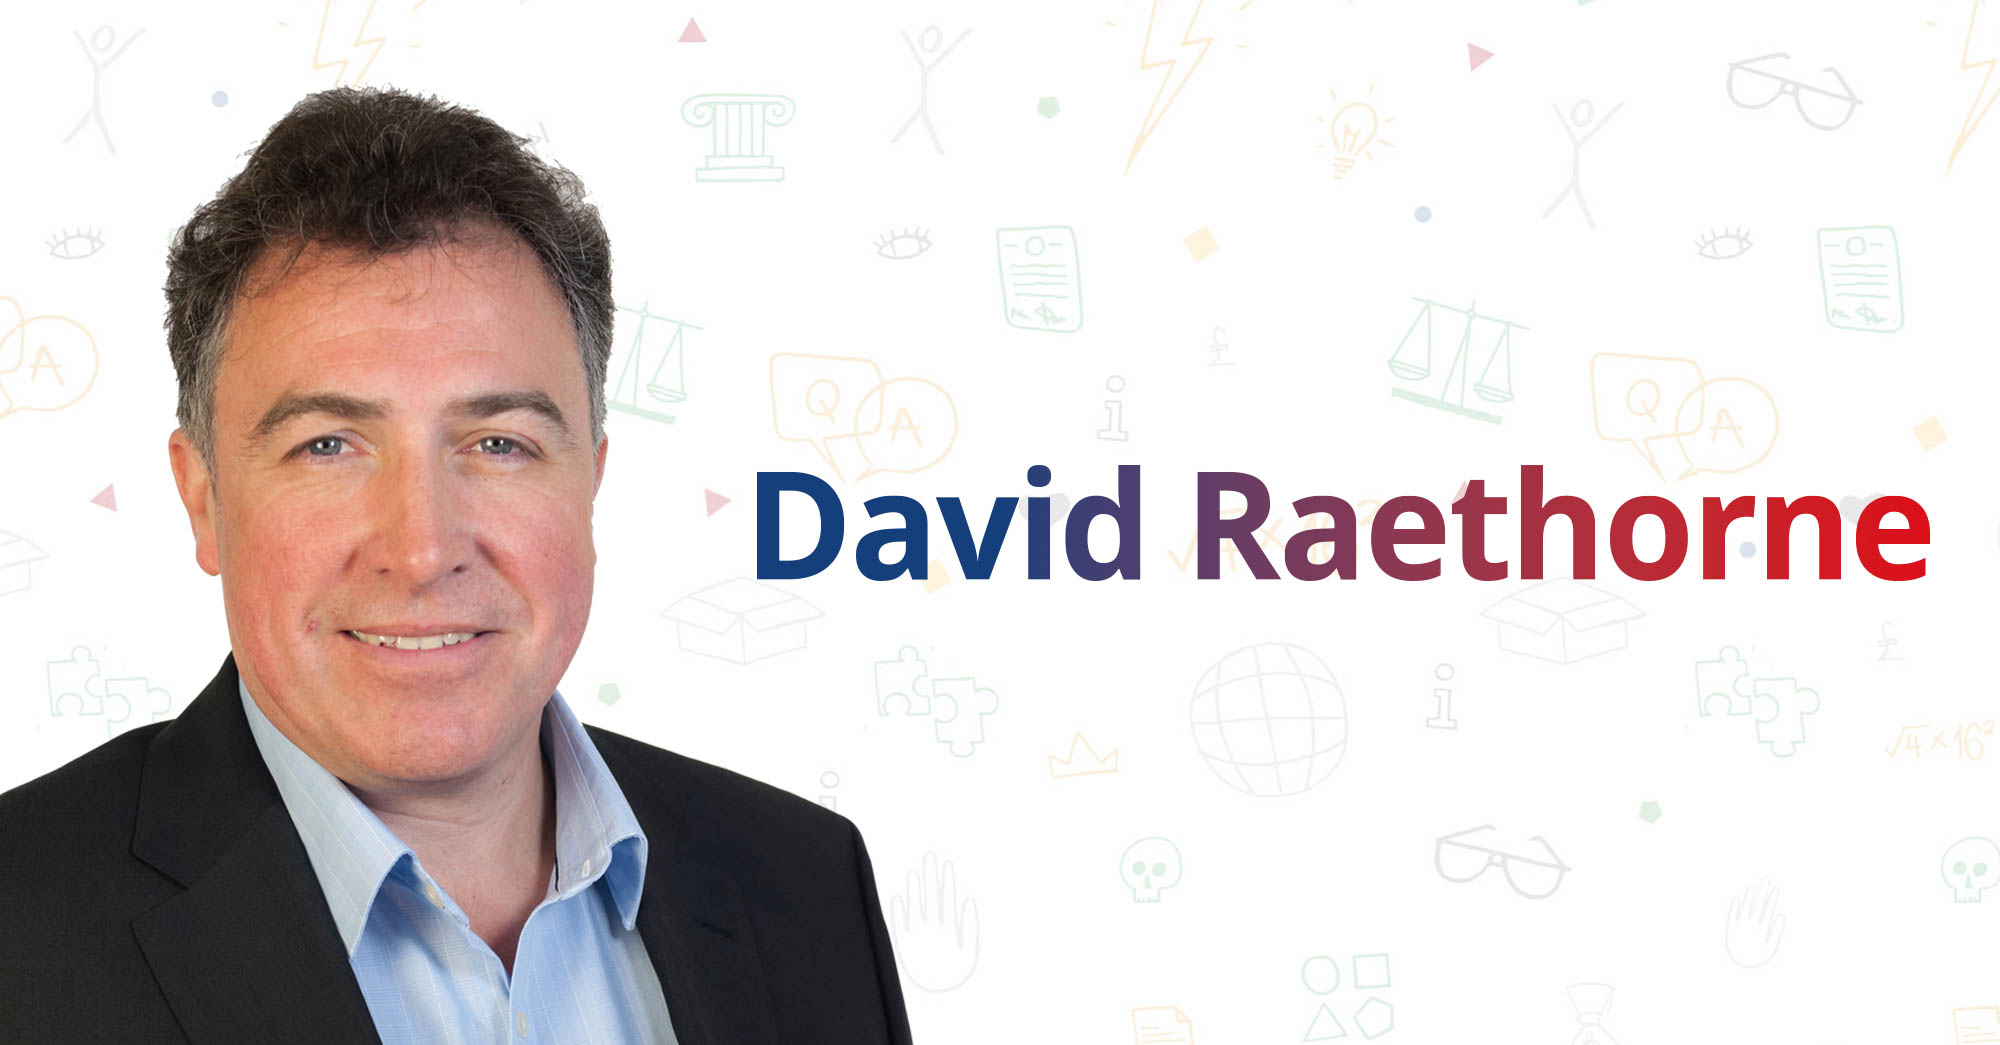 Global Shares appoints new Director David Raethorne